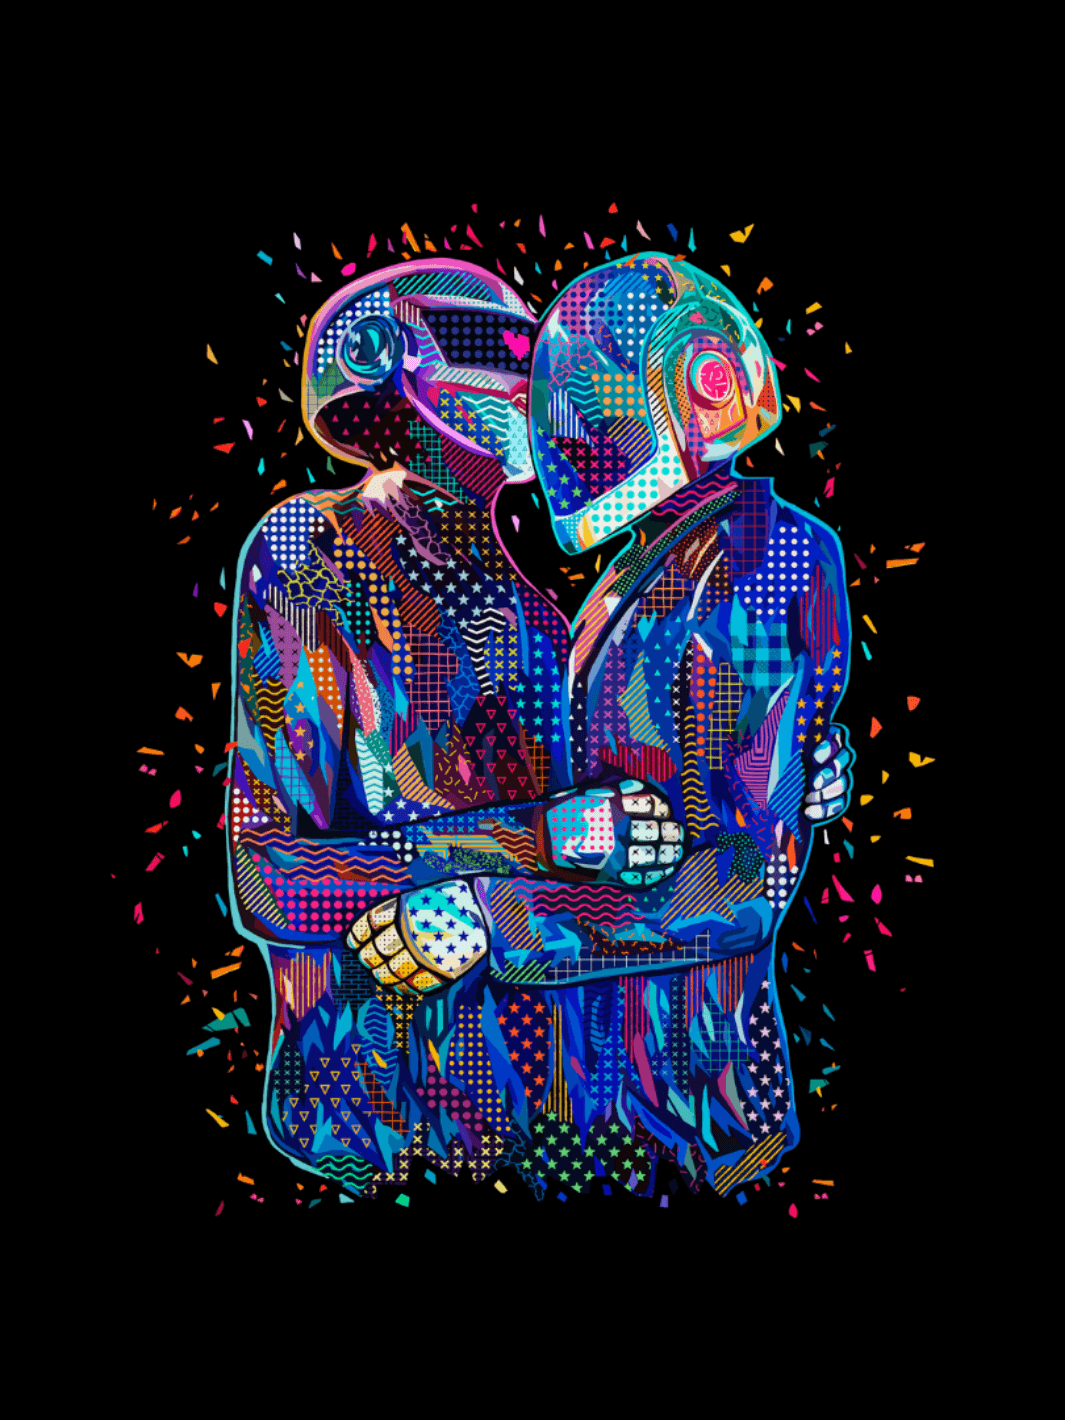 Grafica Daft Punk by Alessandro Pautasso.